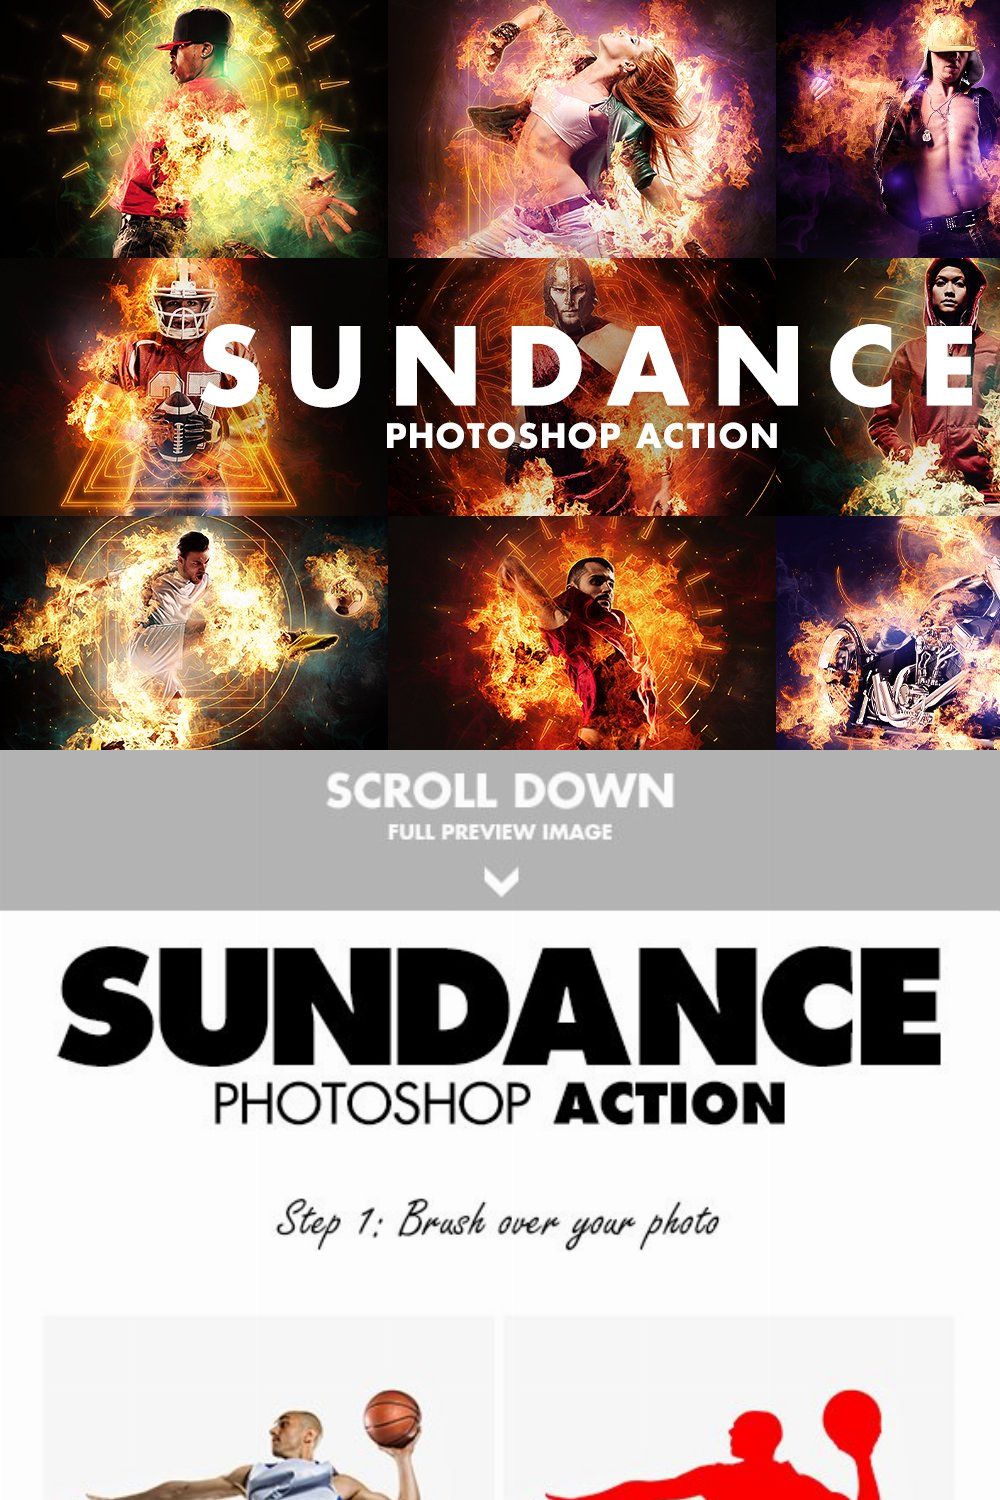 Sundance Photoshop Action pinterest preview image.